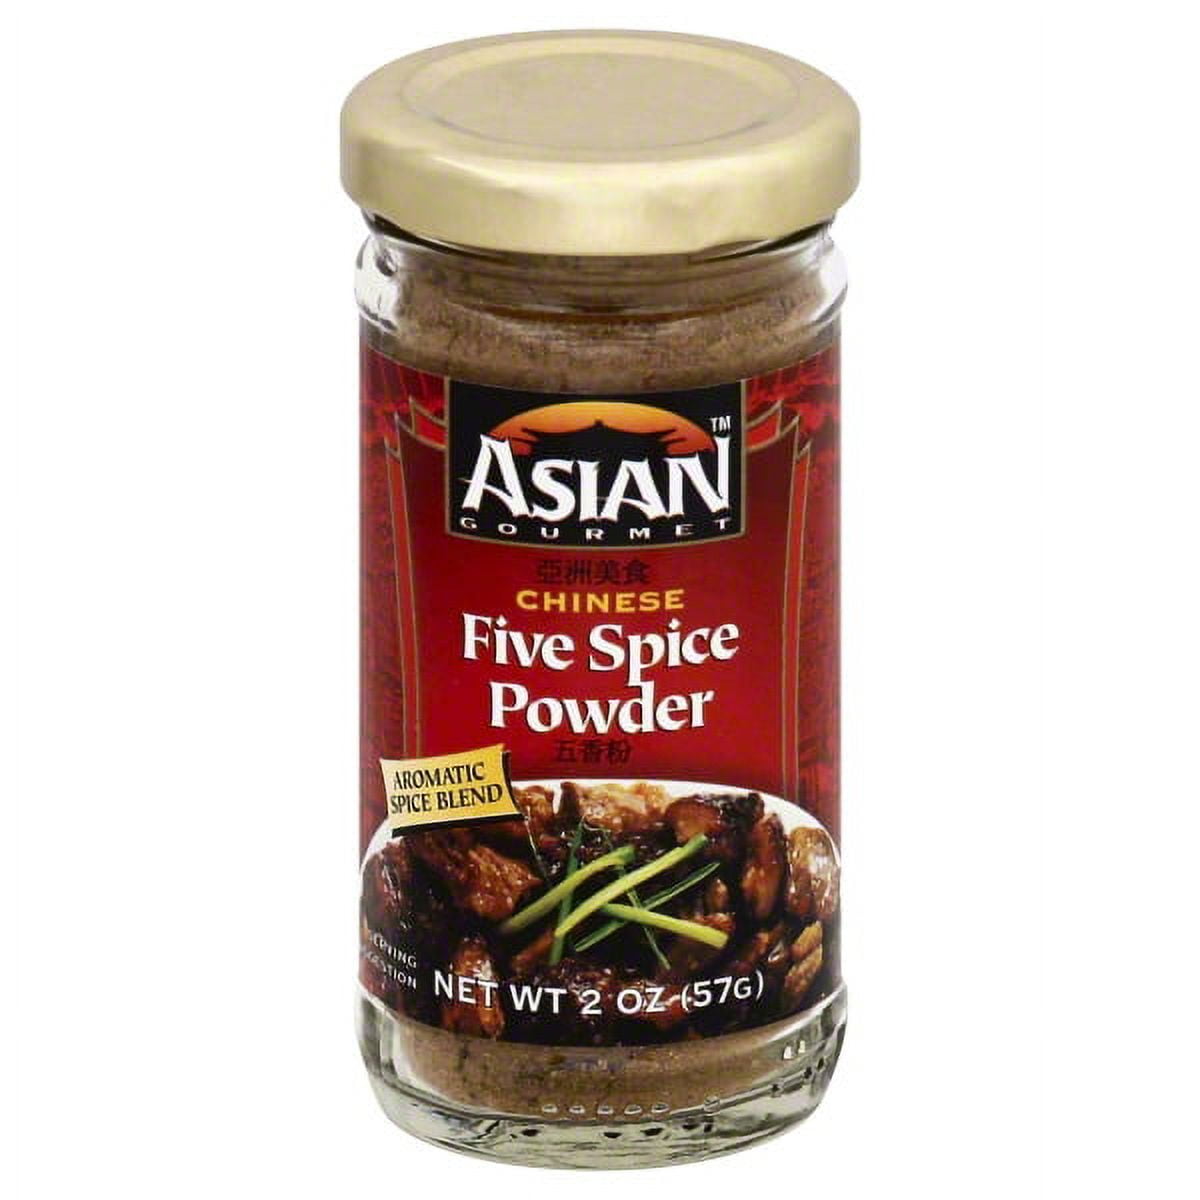 Simply Asia Spicy Szechuan 5 Spice Seasoning Blend, 2.75 oz 